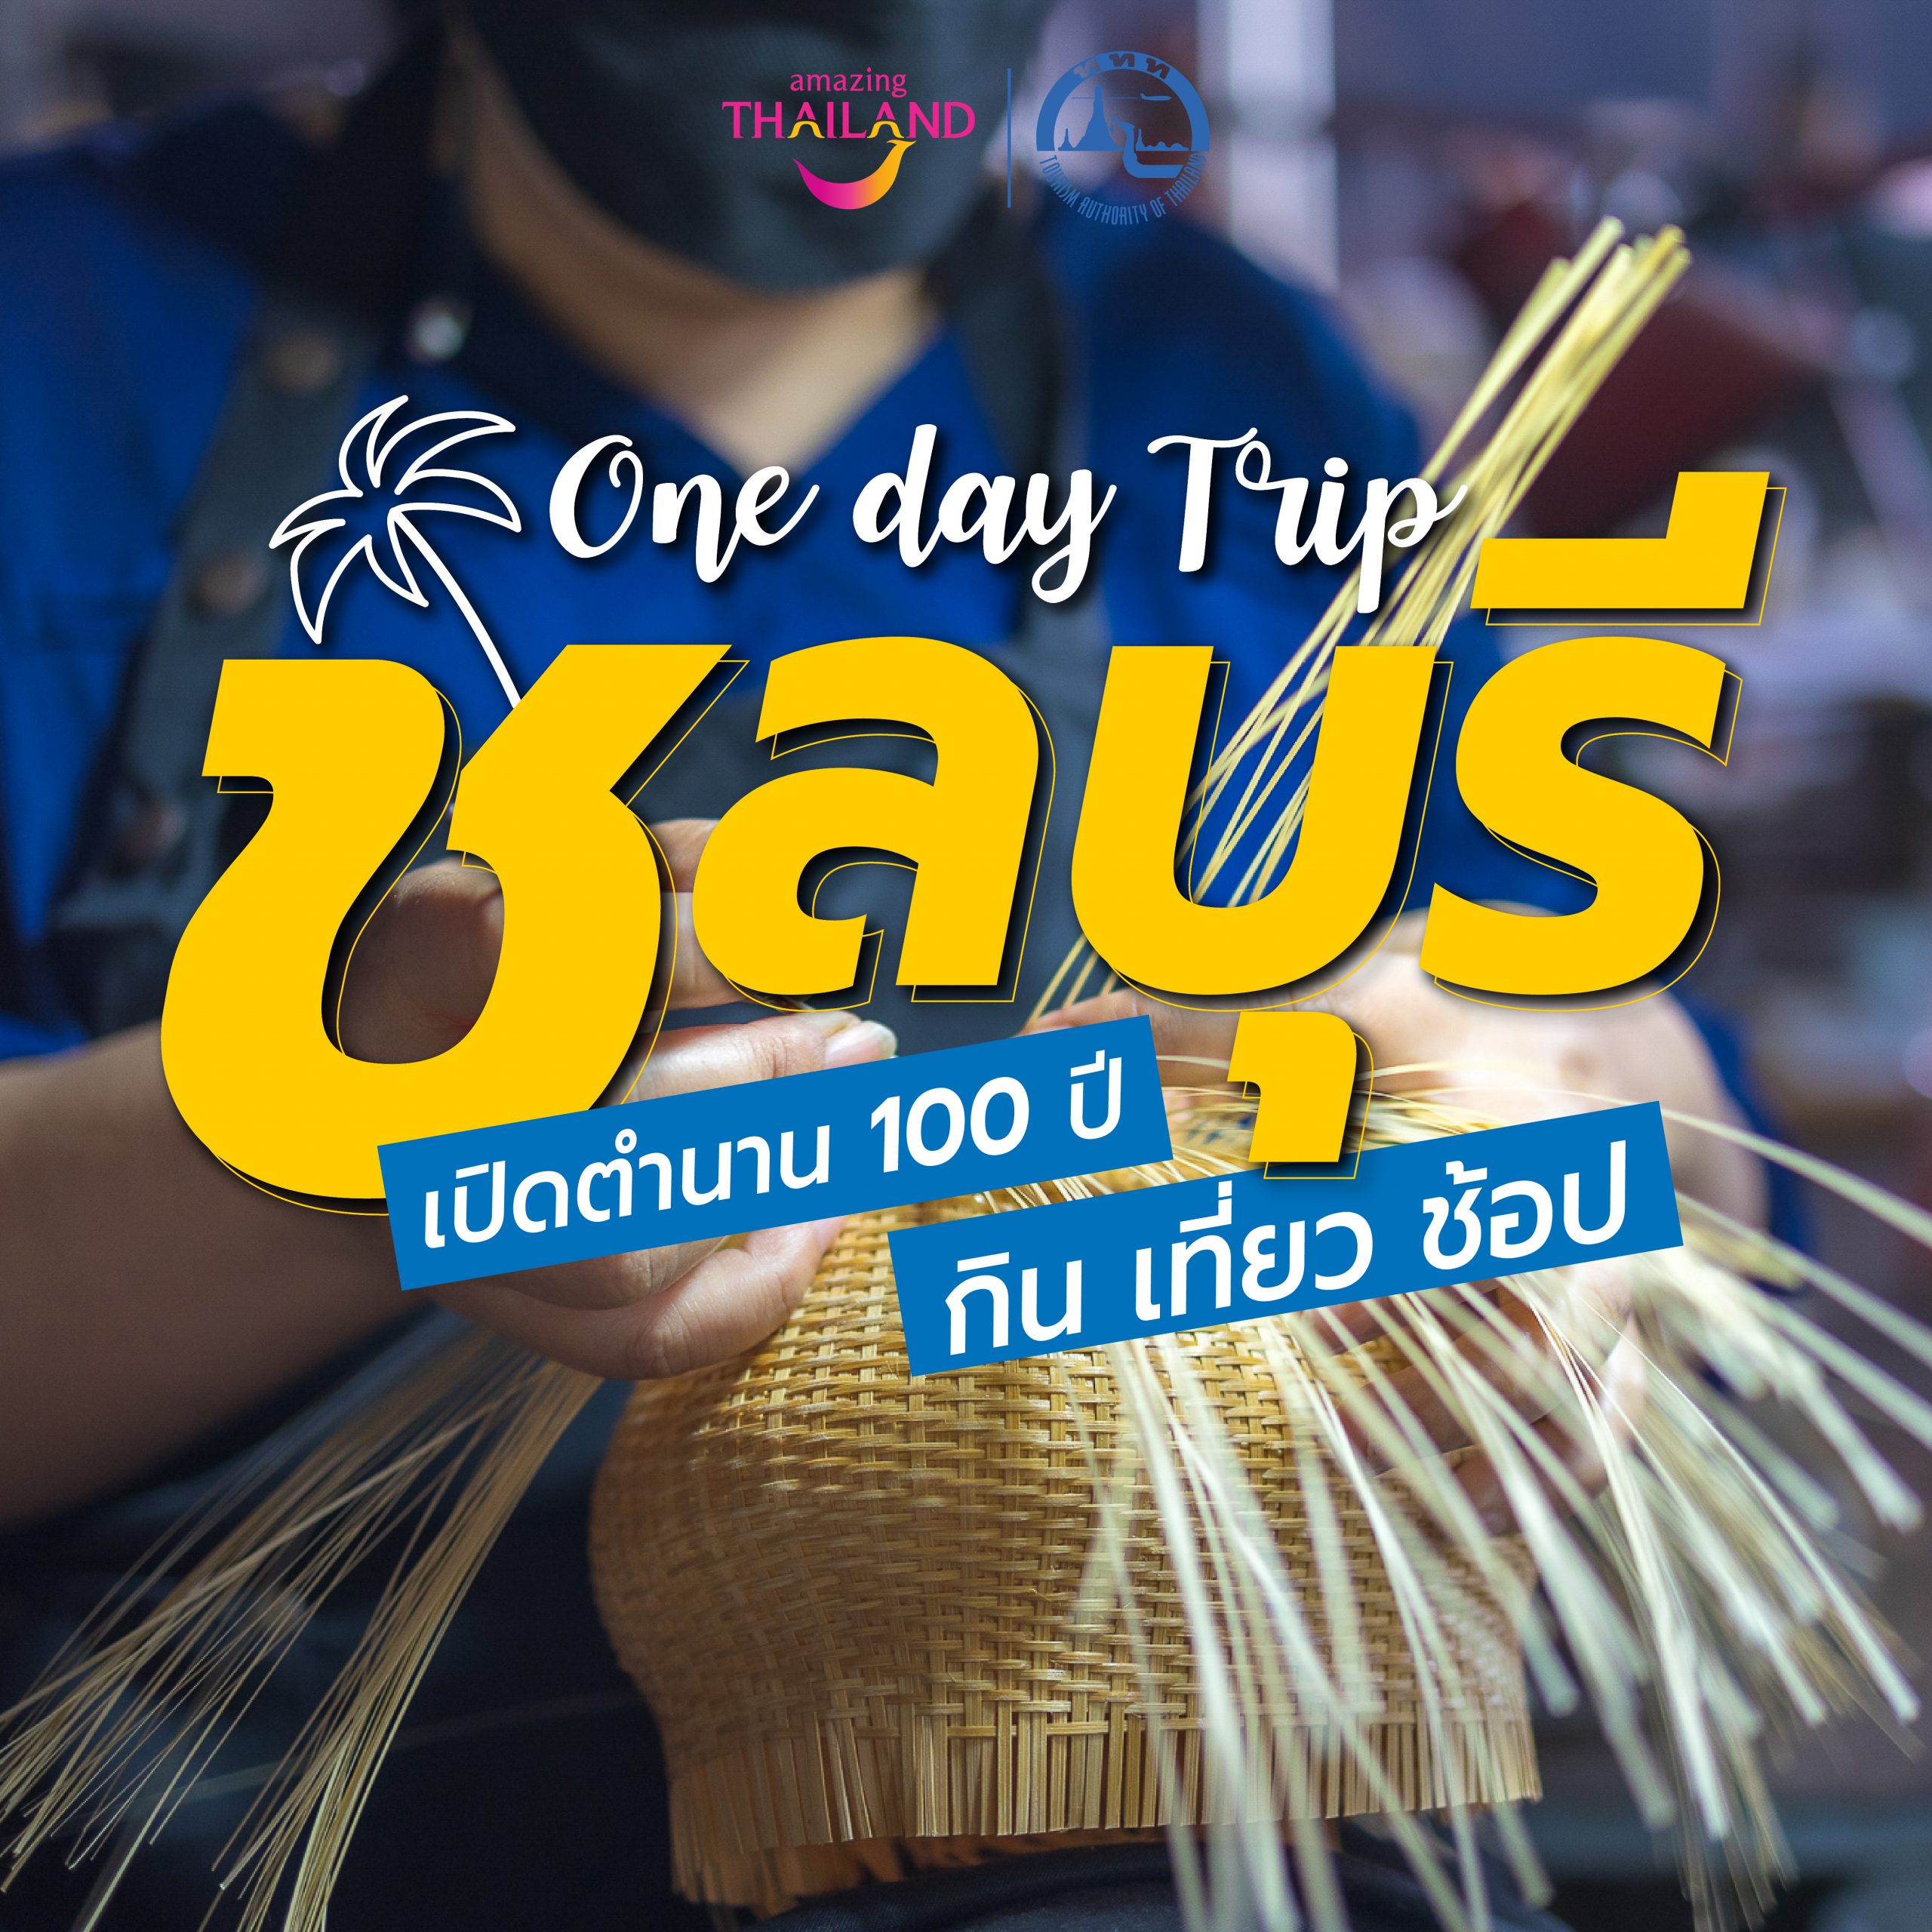 One day Trip Chonburi เปิดตำนาน 100 ปี กิน เที่ยว ช้อป